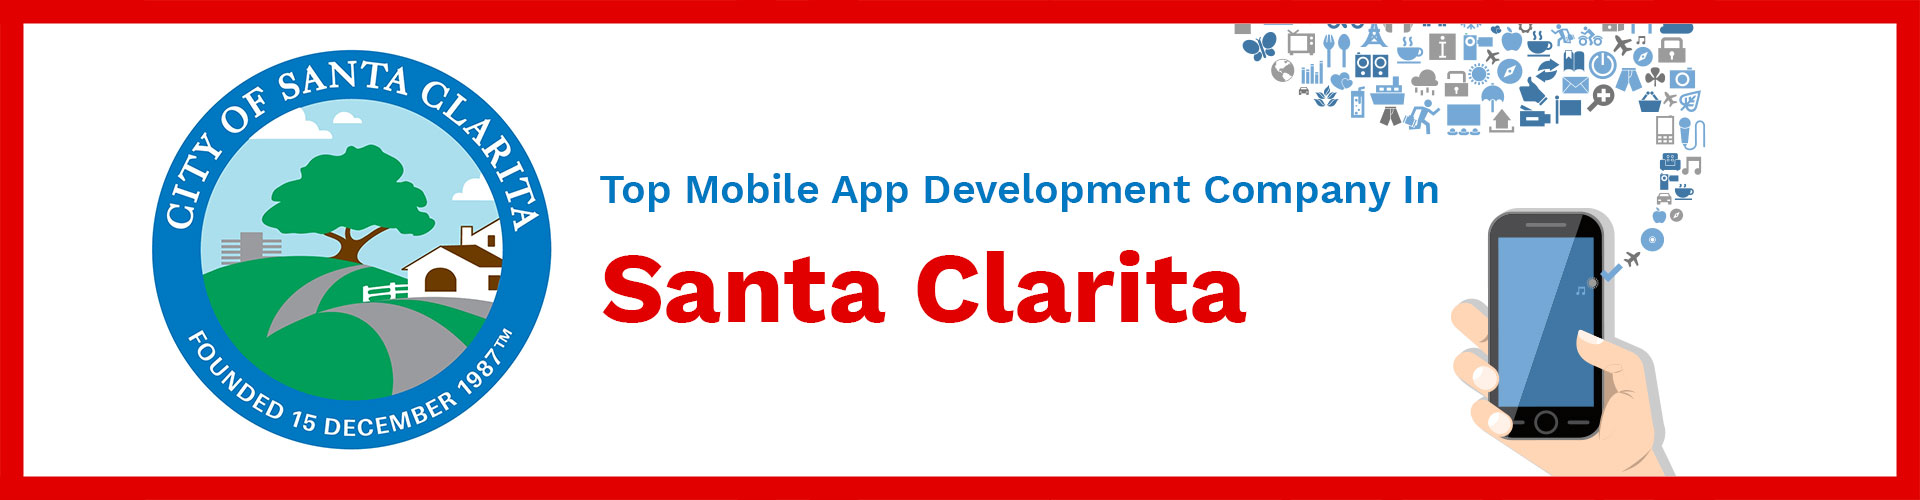 mobile app development company santa clarita